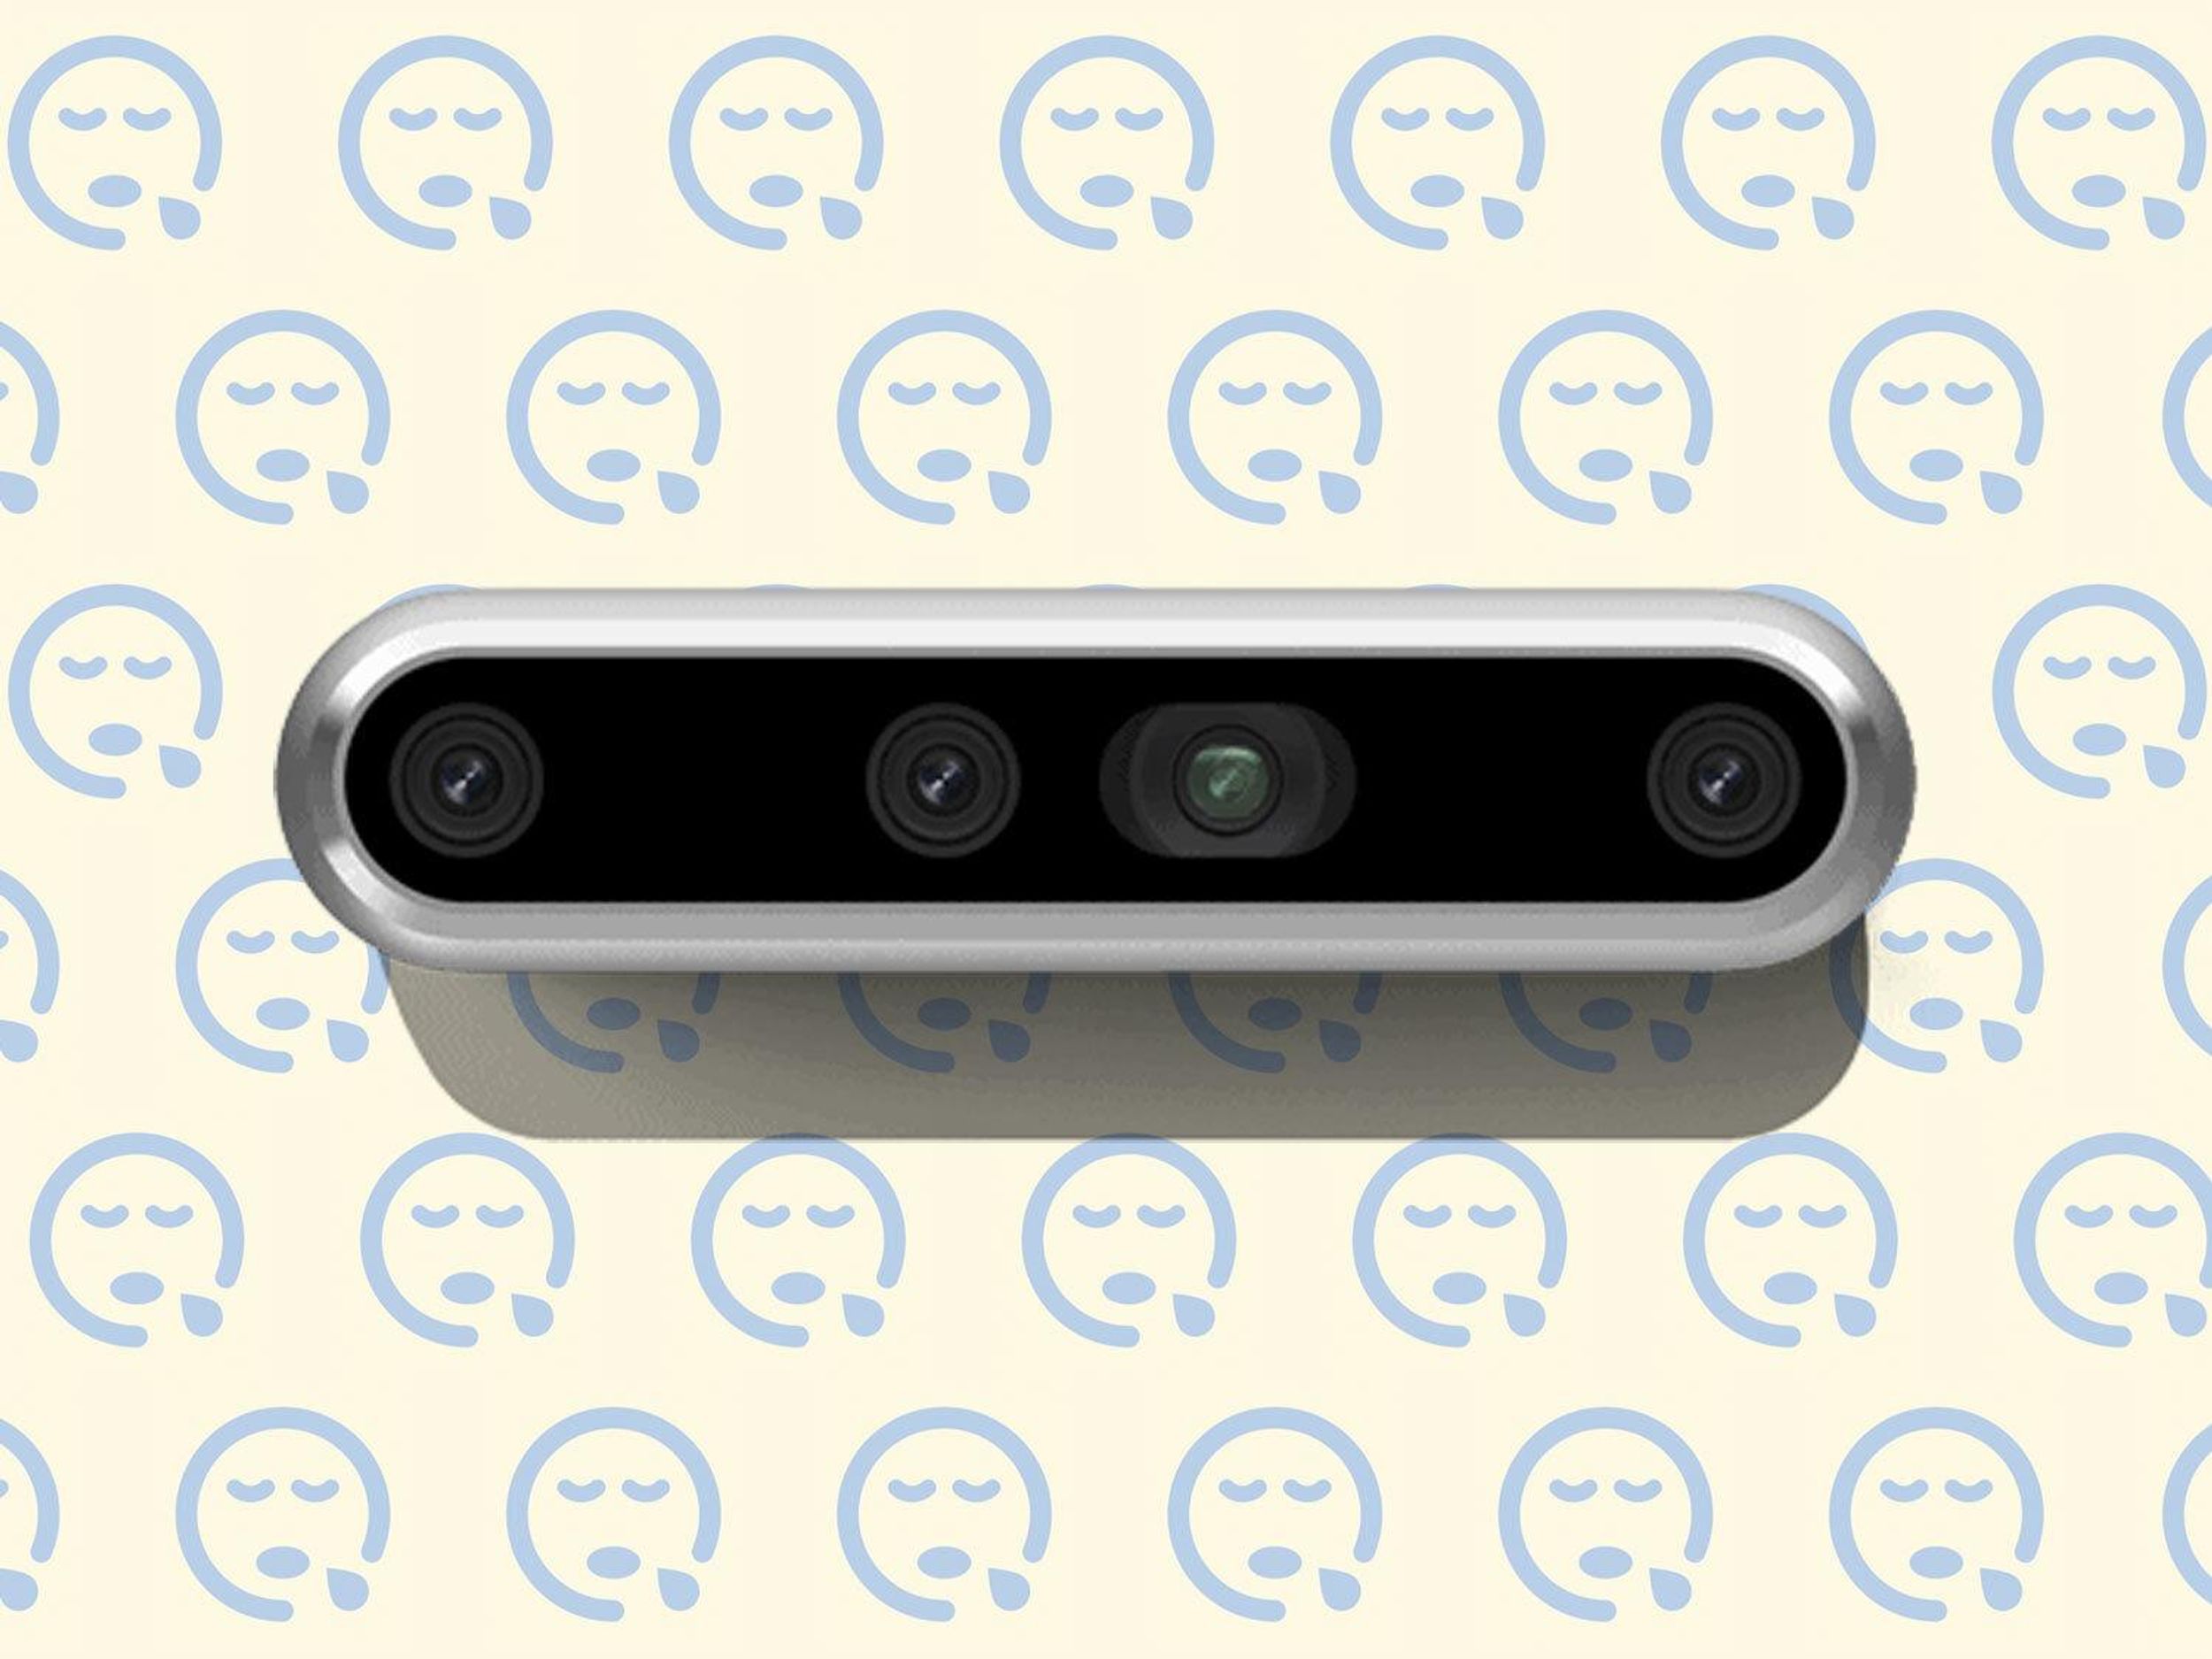 An Intel RealSense depth camera on top of phew emojis